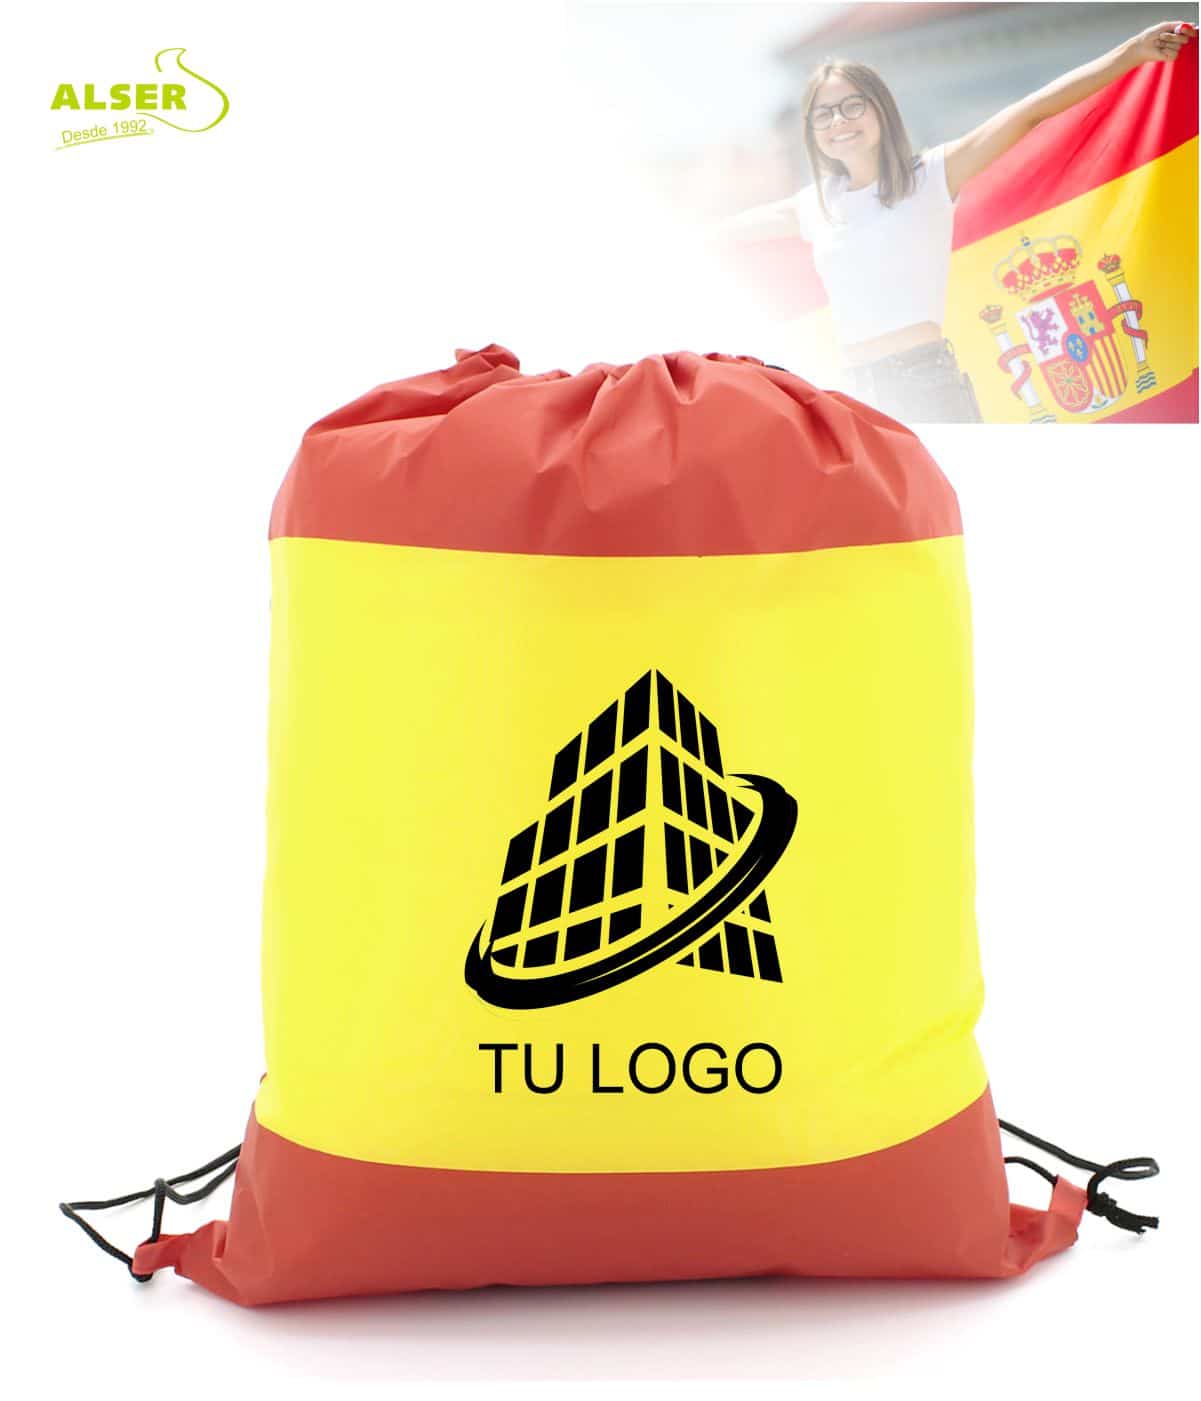 Mochila saco bandera española con logo